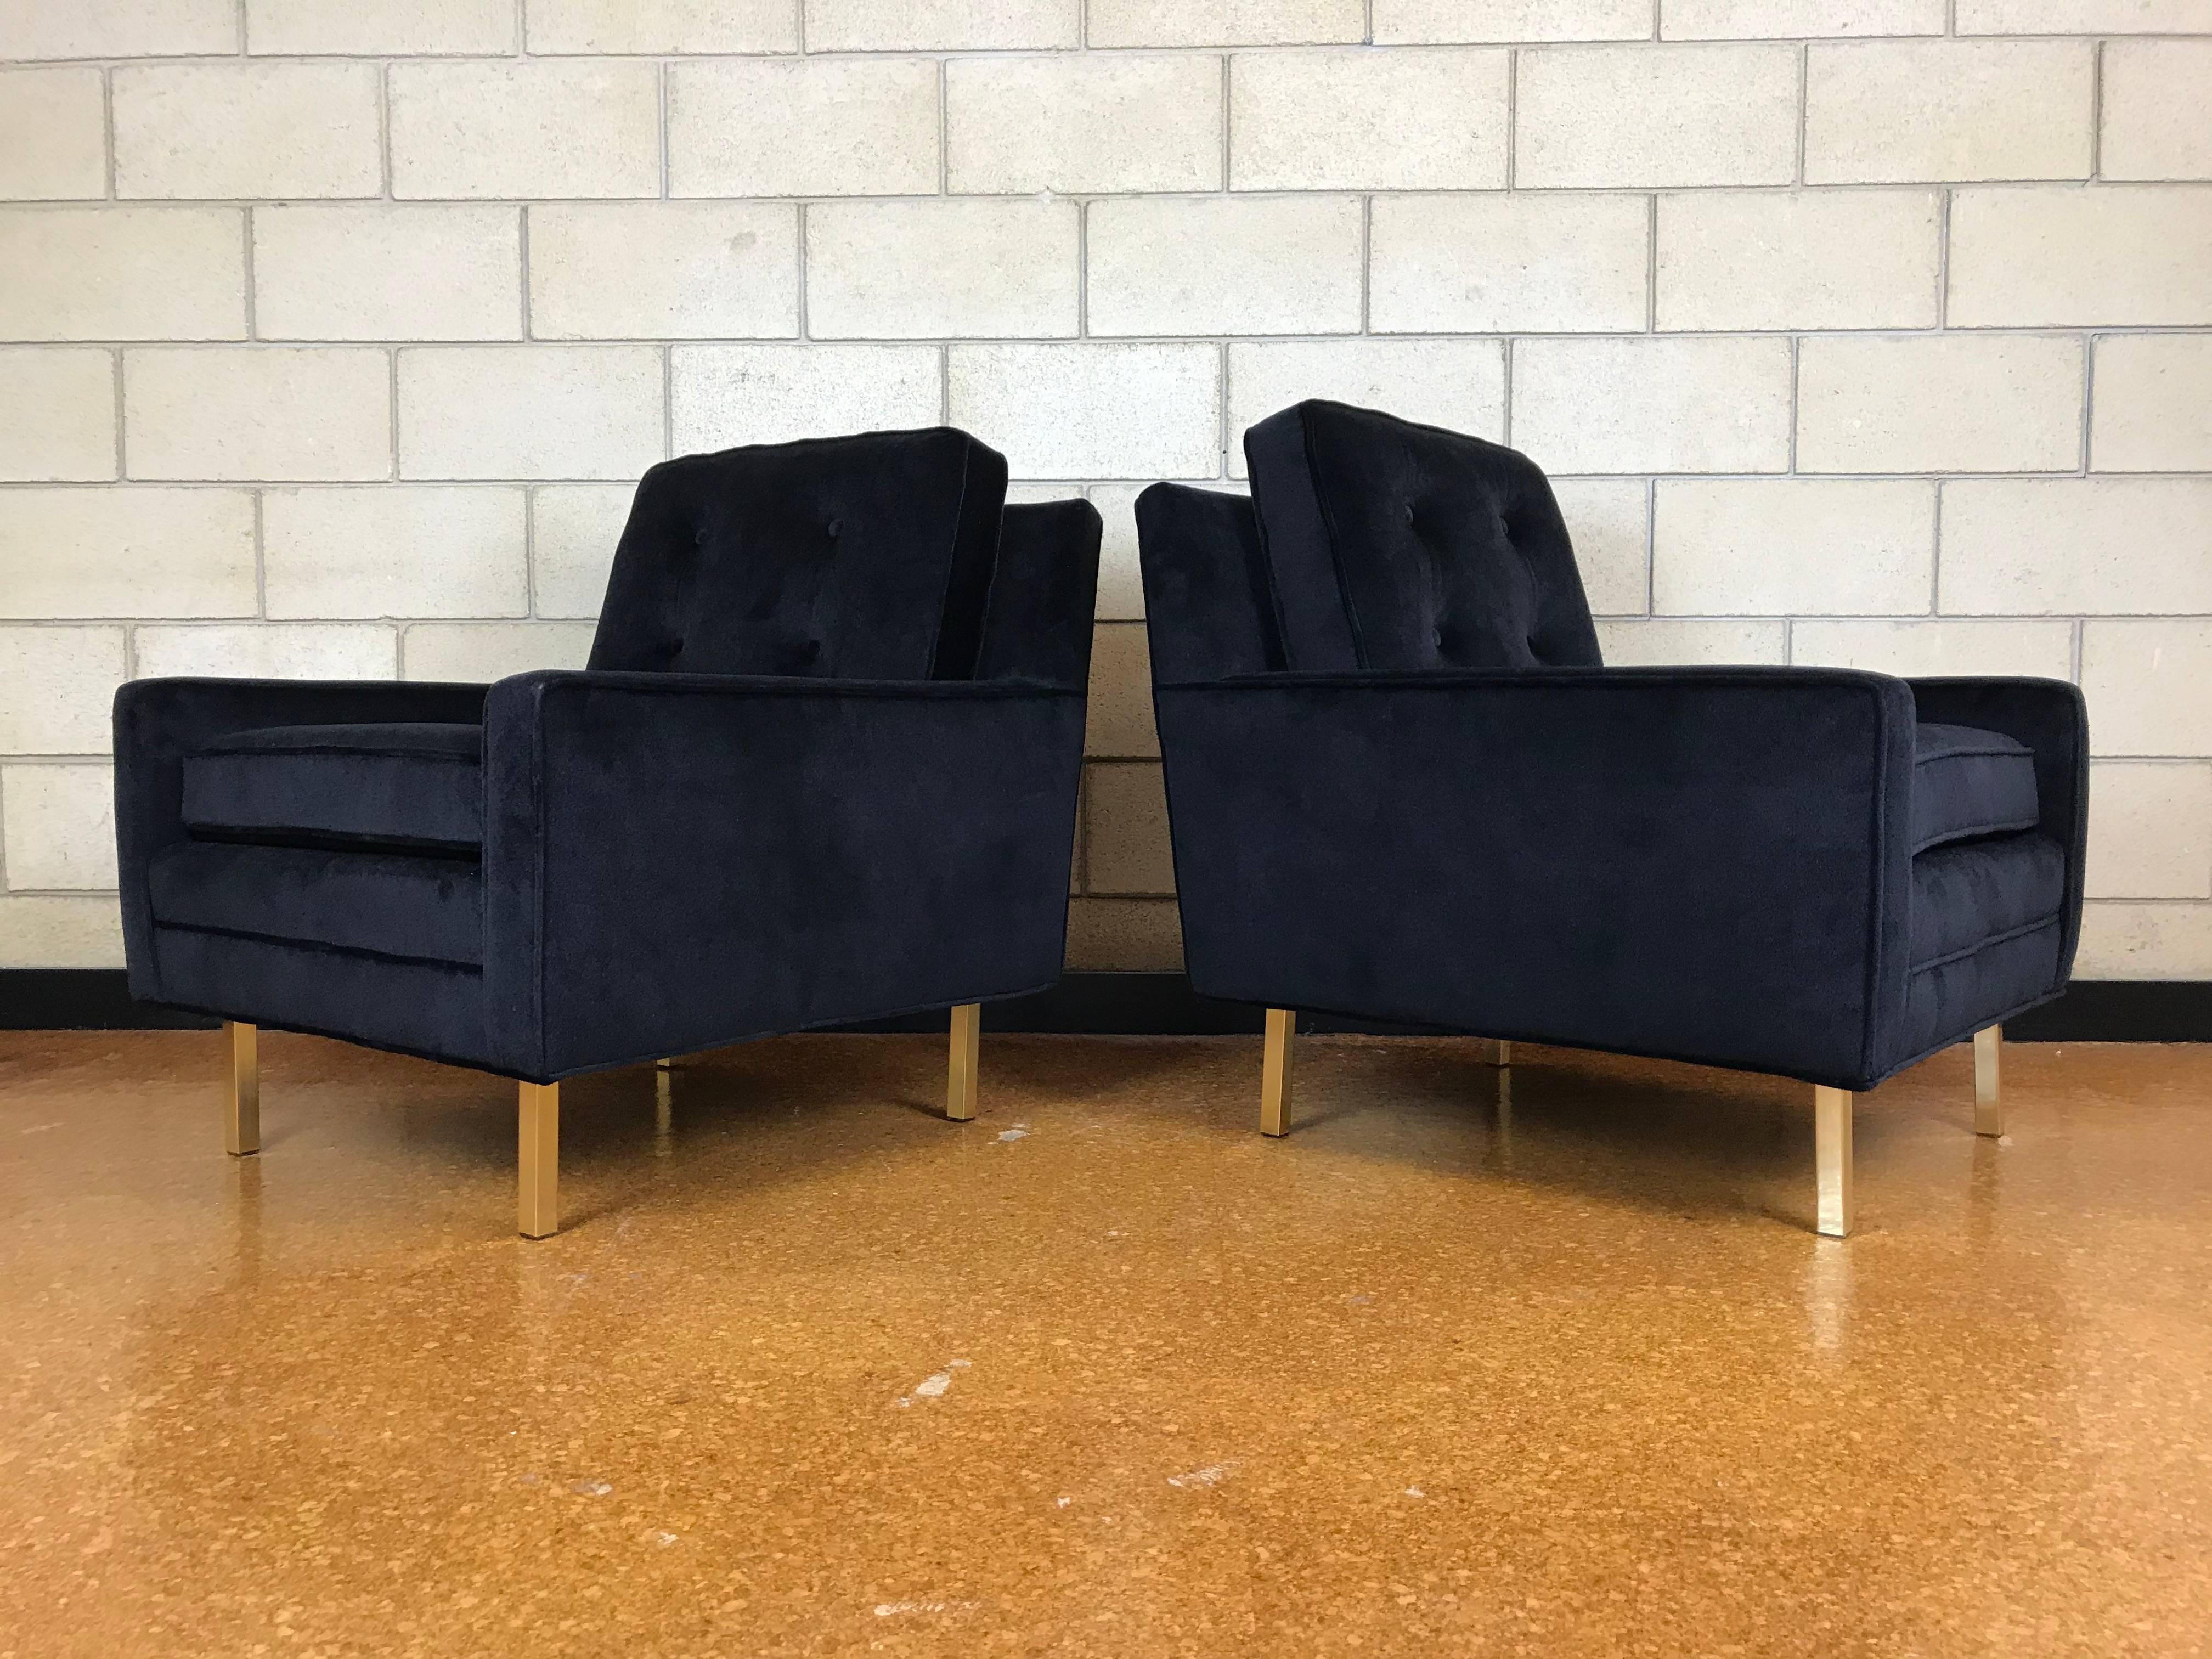 Pair of Mid-Century Modern Tuxedo Lounge Chairs in Black Velvet with Brass Legs 3